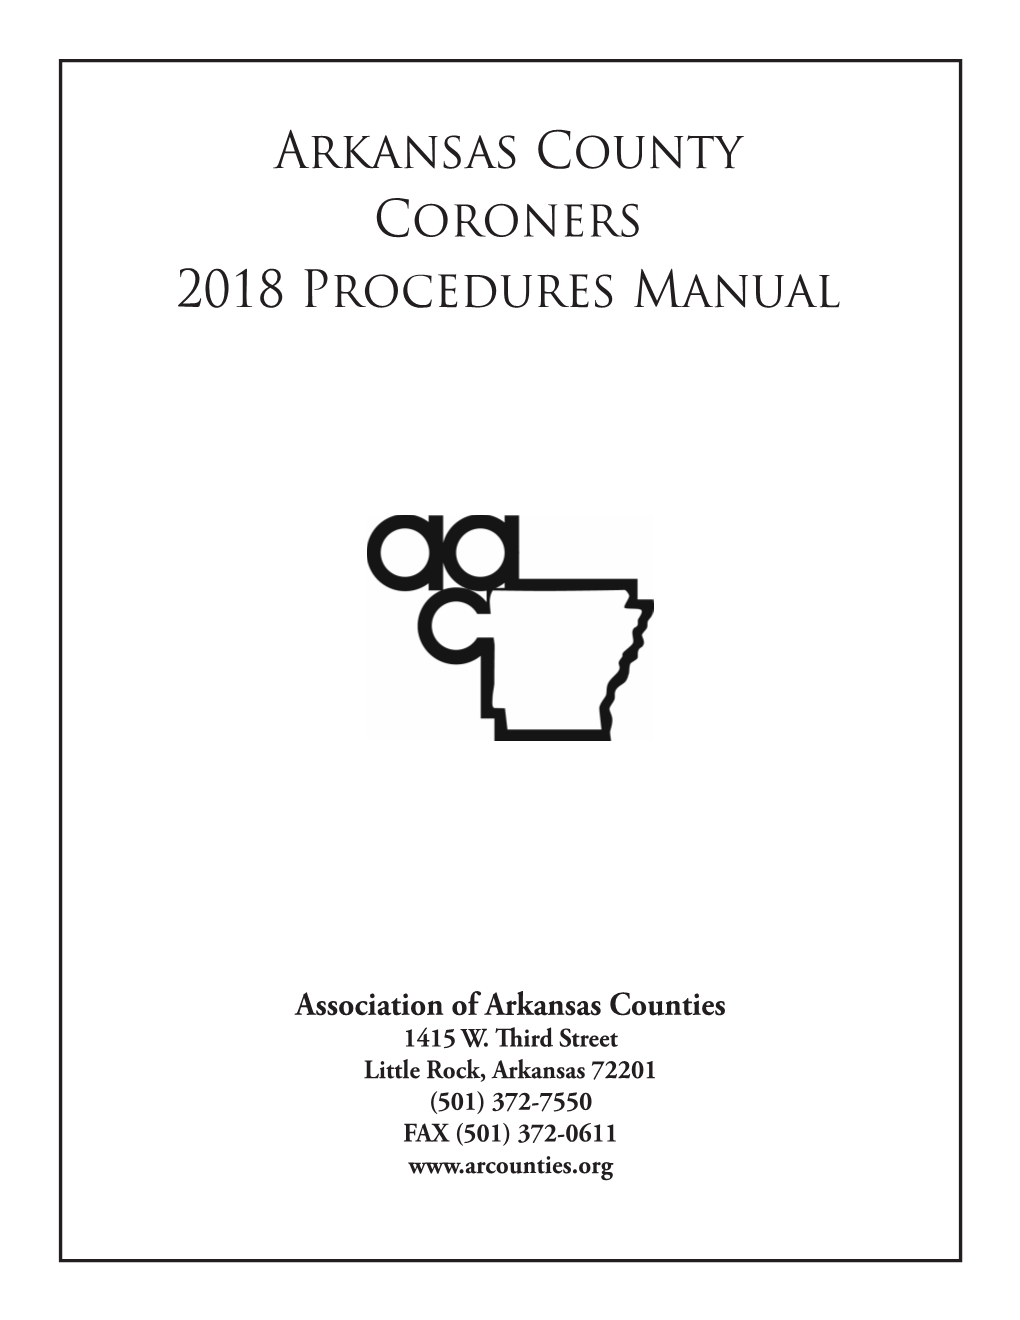 Arkansas County Coroners 2018 Procedures Manual